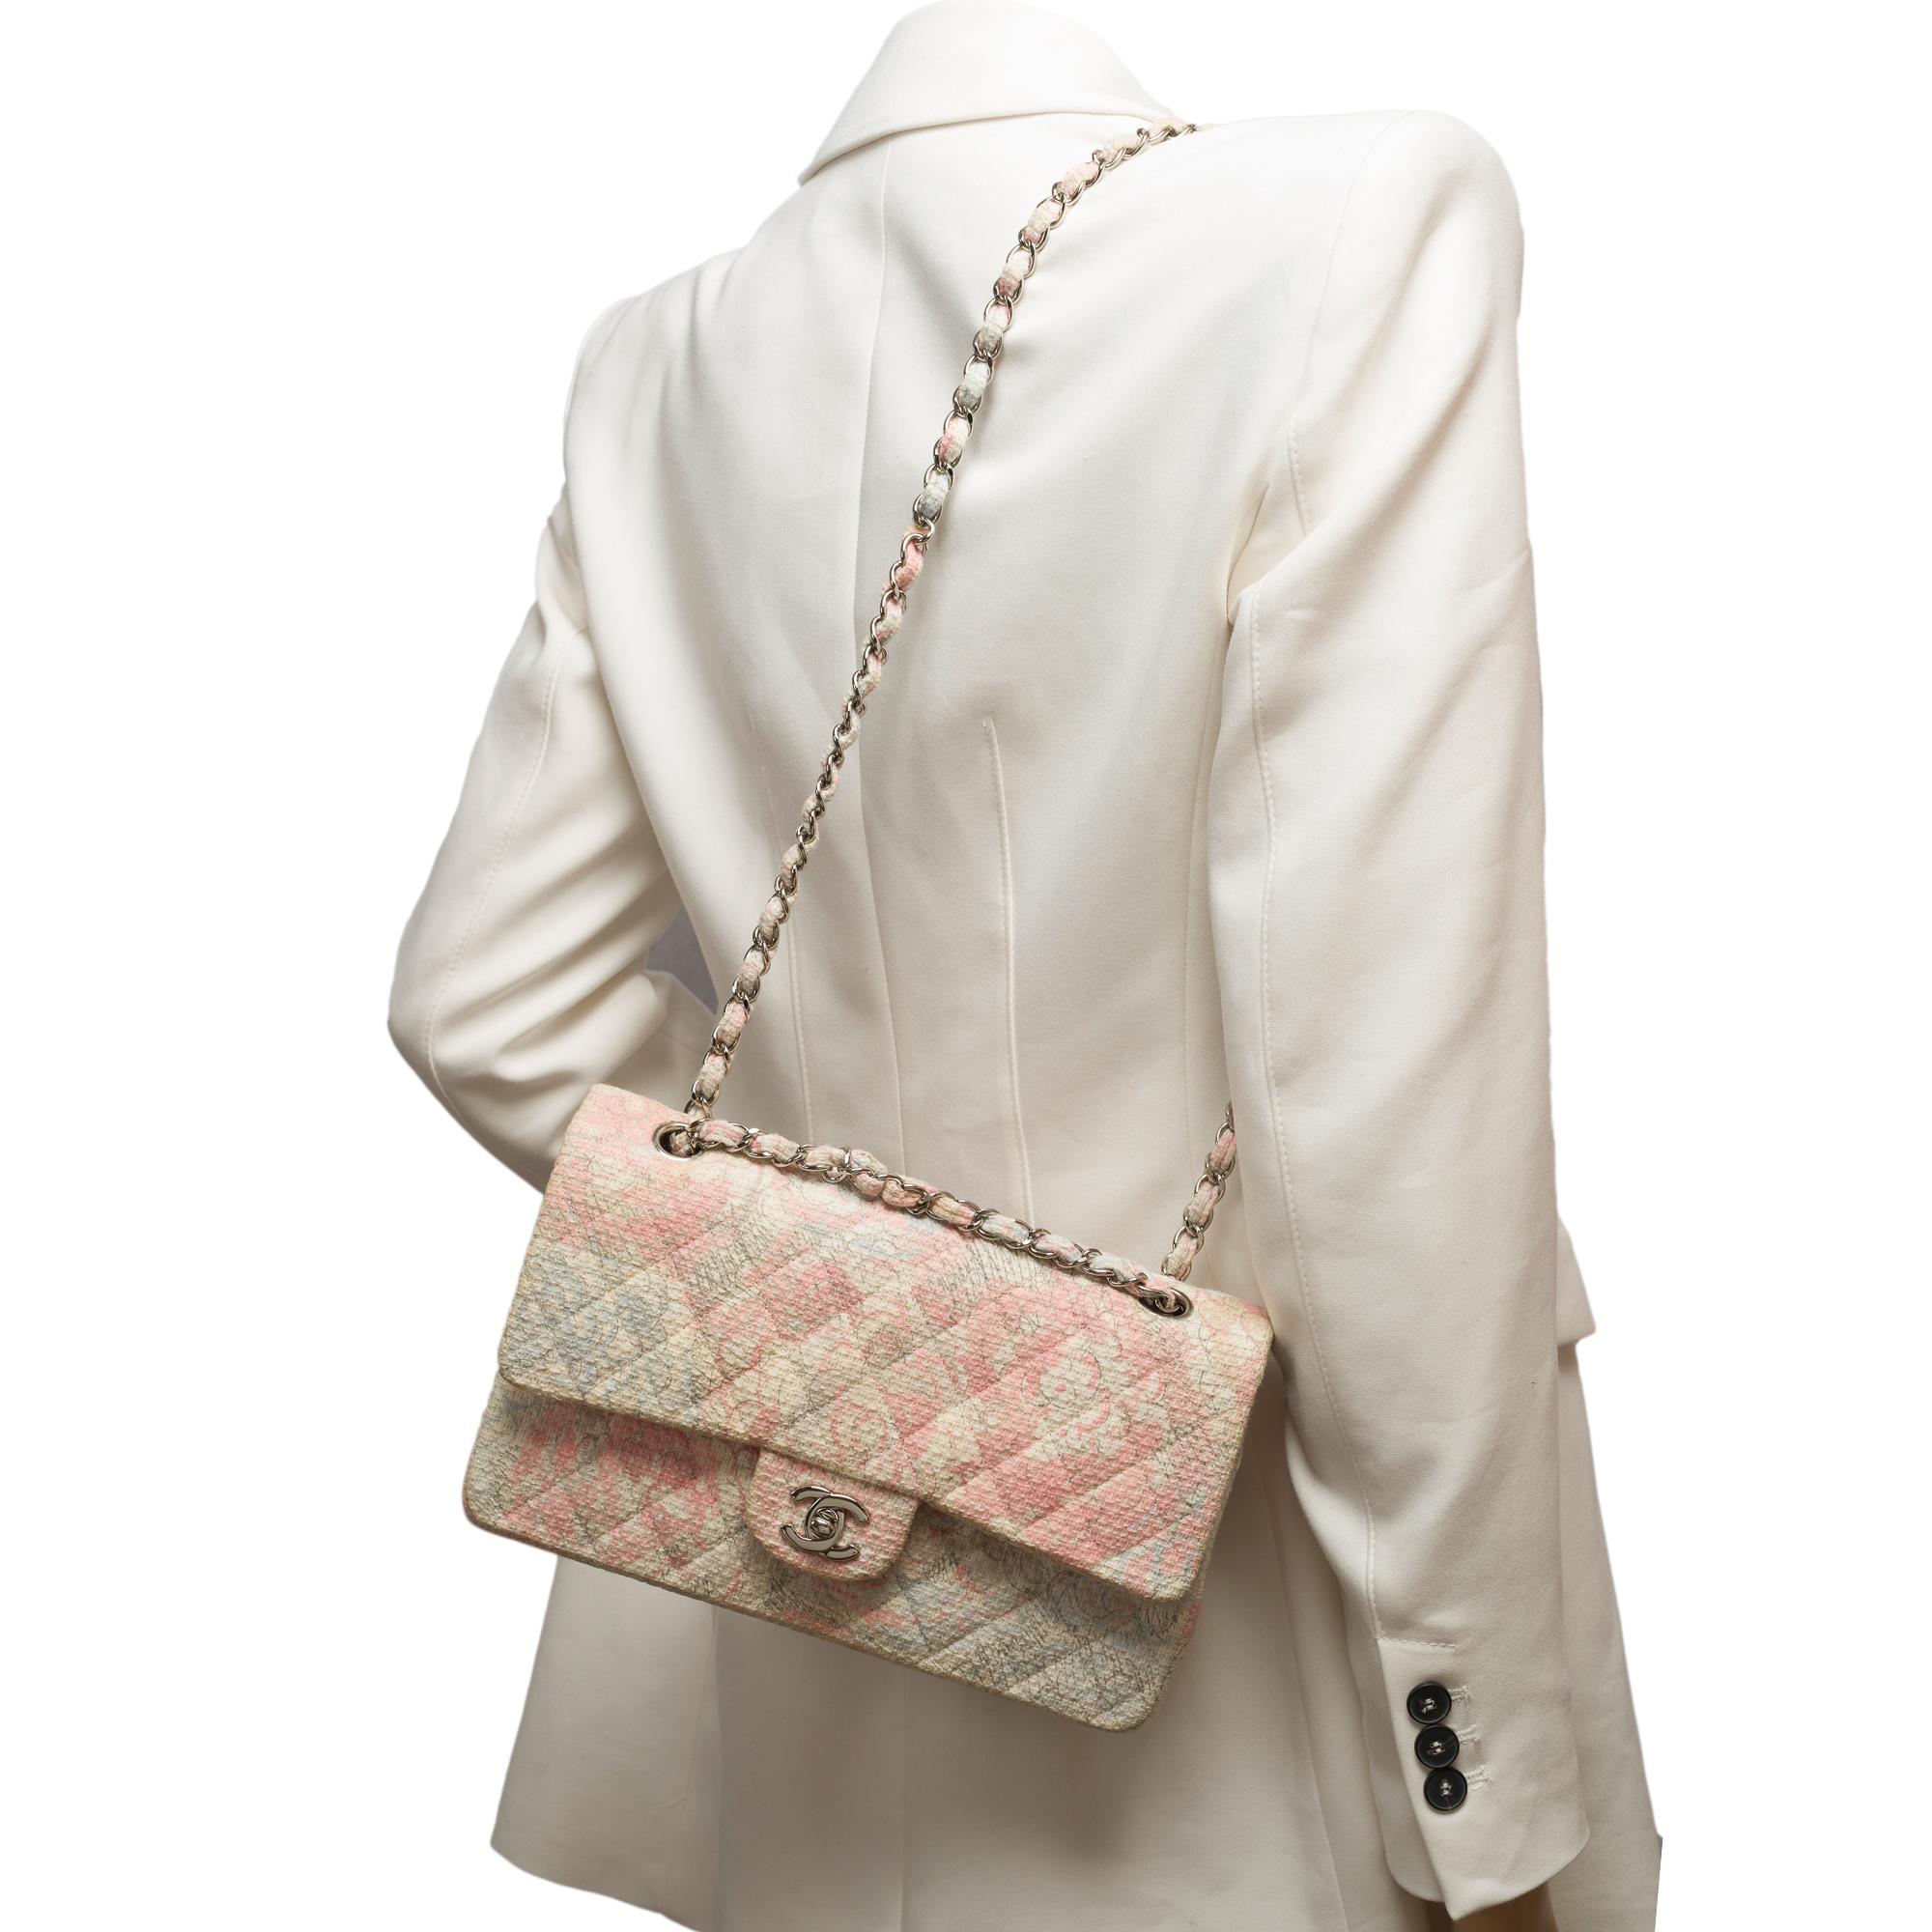 Rare Camelia Limited Edition Chanel Timeless Medium Shoulder bag in Tweed, SHW 8